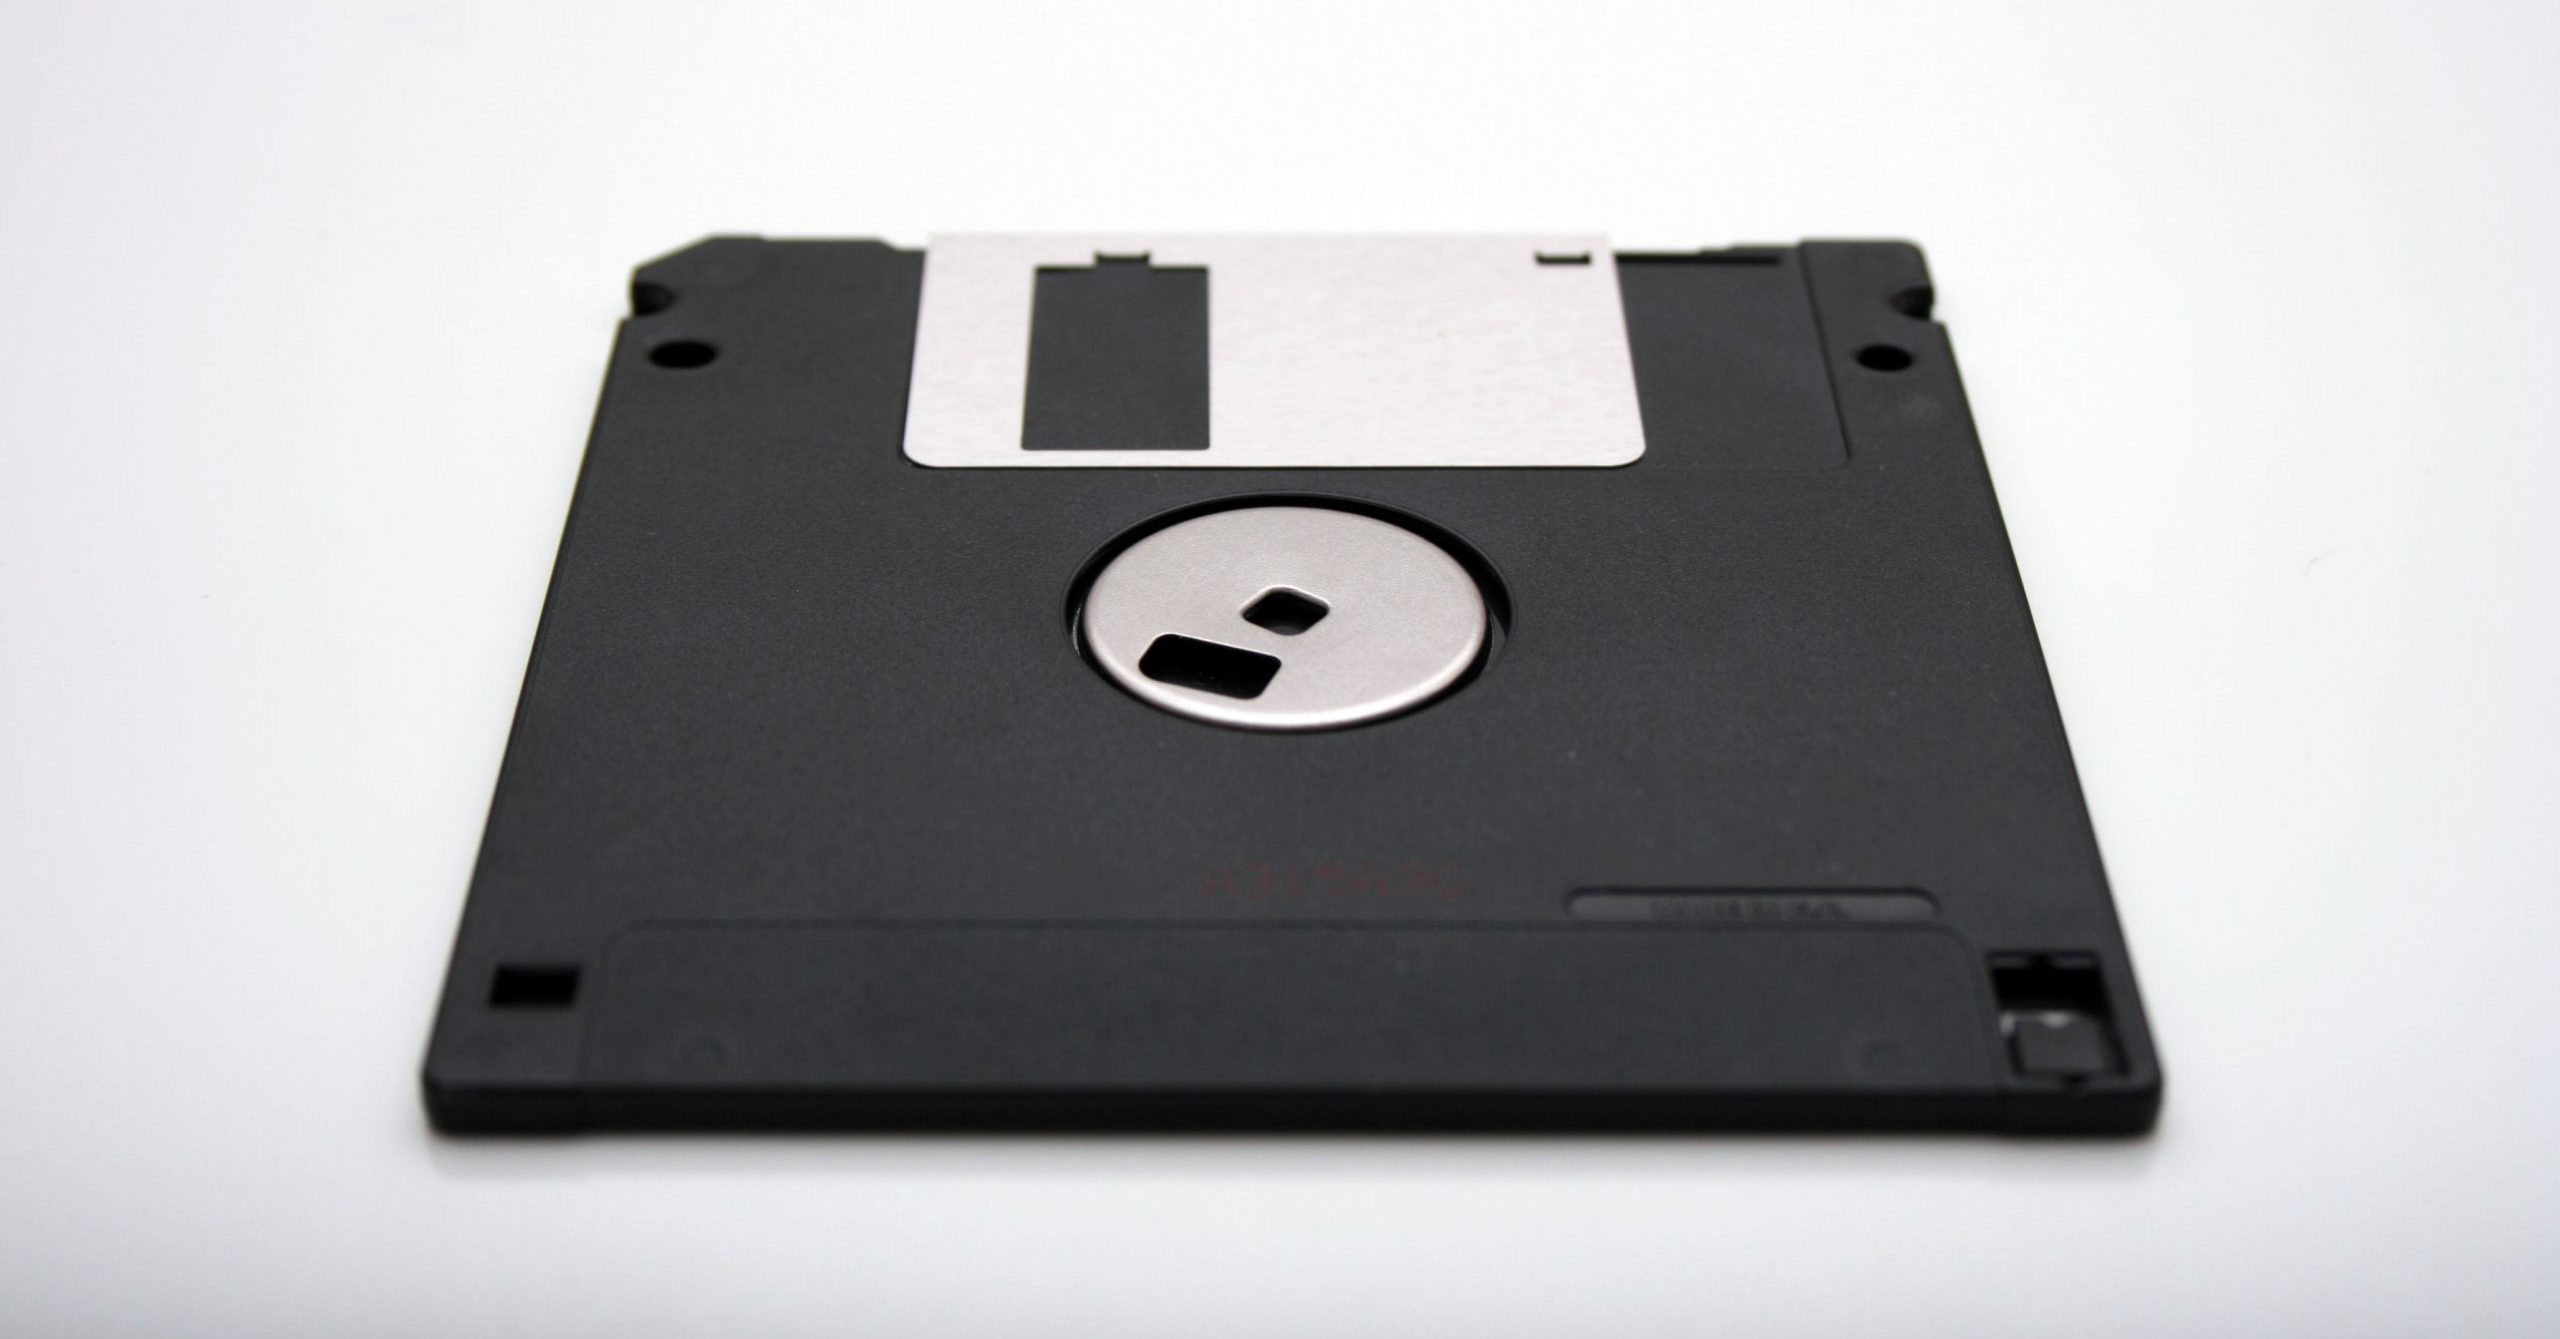 The Wrap: ‘Star Trek’ Creator Gene Roddenberry’s Lost Data Recovered From 200 Floppy Disks